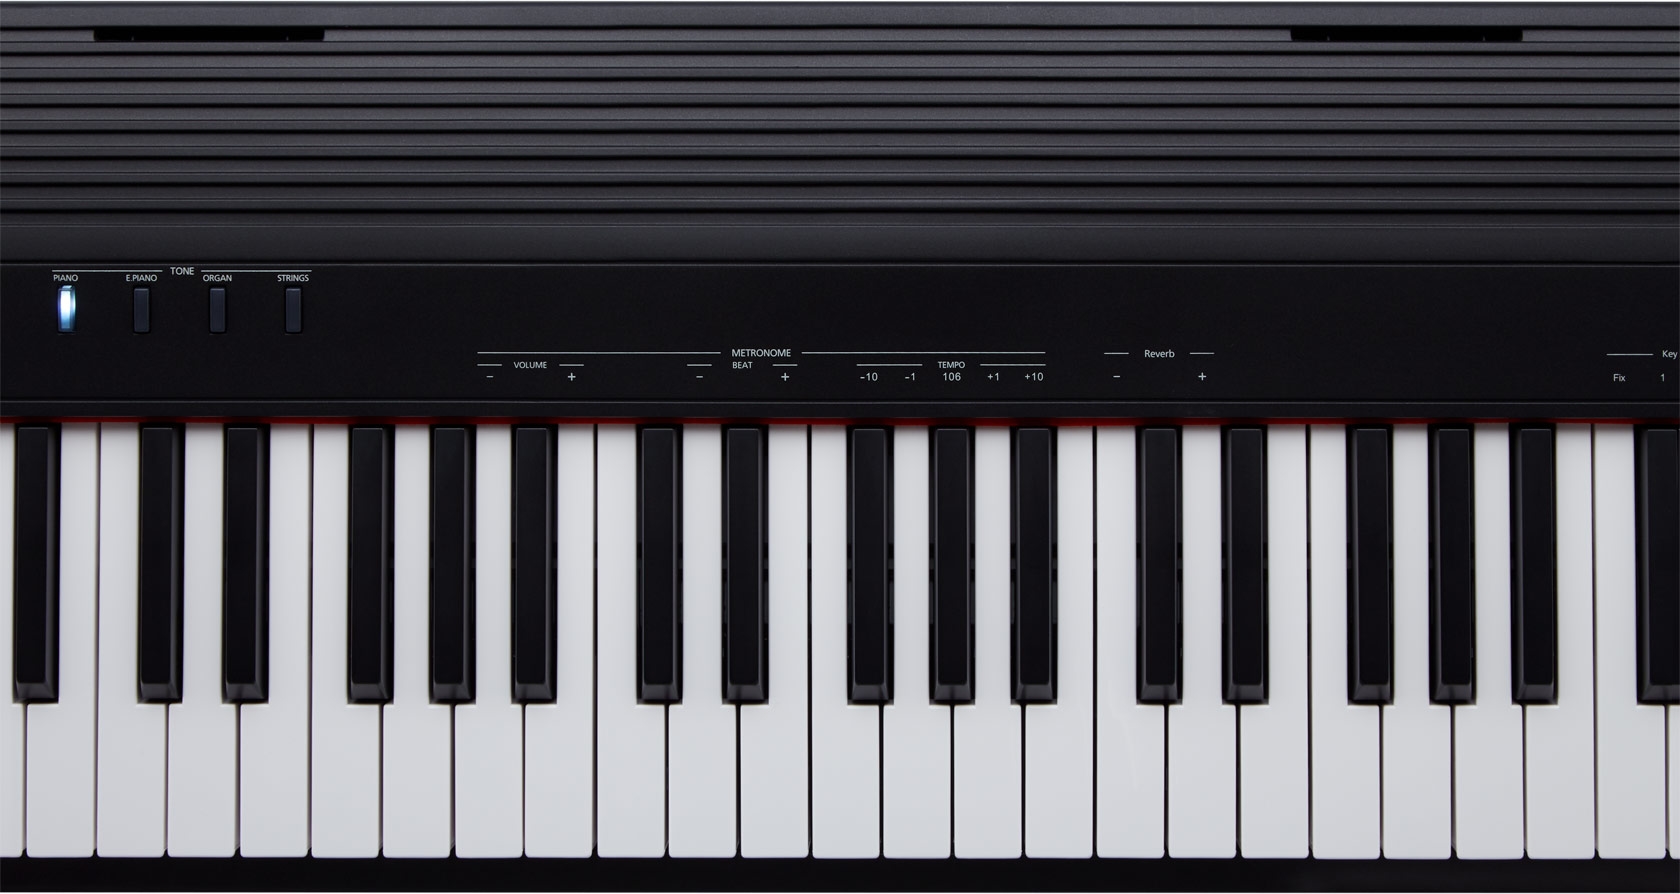 Roland GO-88P Цифровые пианино